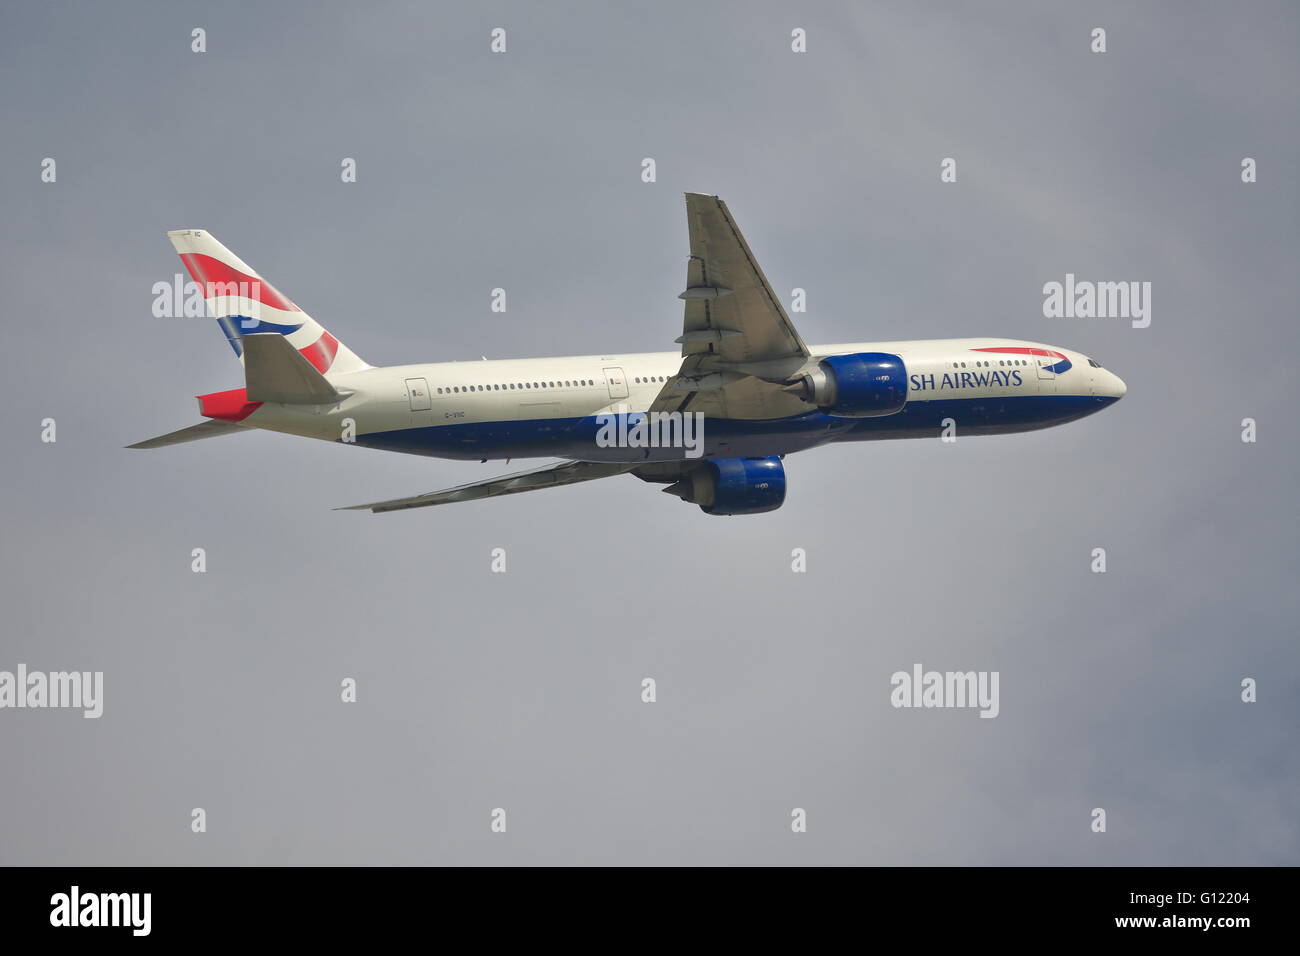 British Airways Boeing 777-200ER G-VIIC departing from London Heathrow Airport, UK Stock Photo